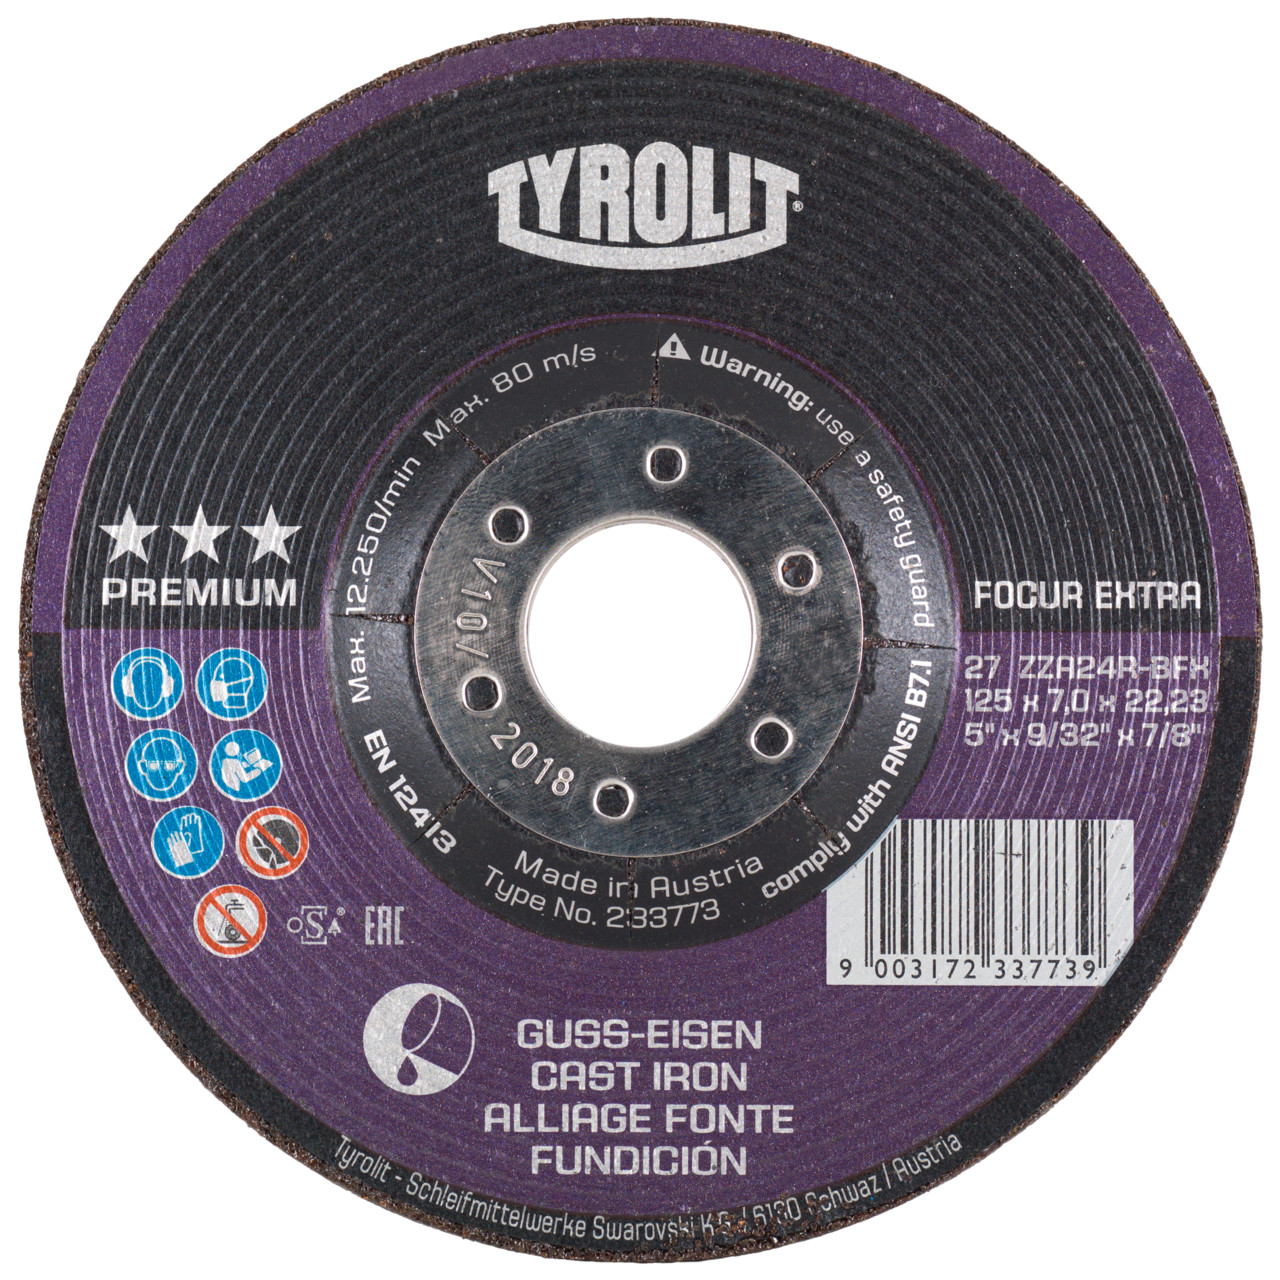 Tyrolit Roughing disc DxUxH 178x4x22.23 FOCUR Extra for cast iron, shape: 27 - offset version, Art. 233757